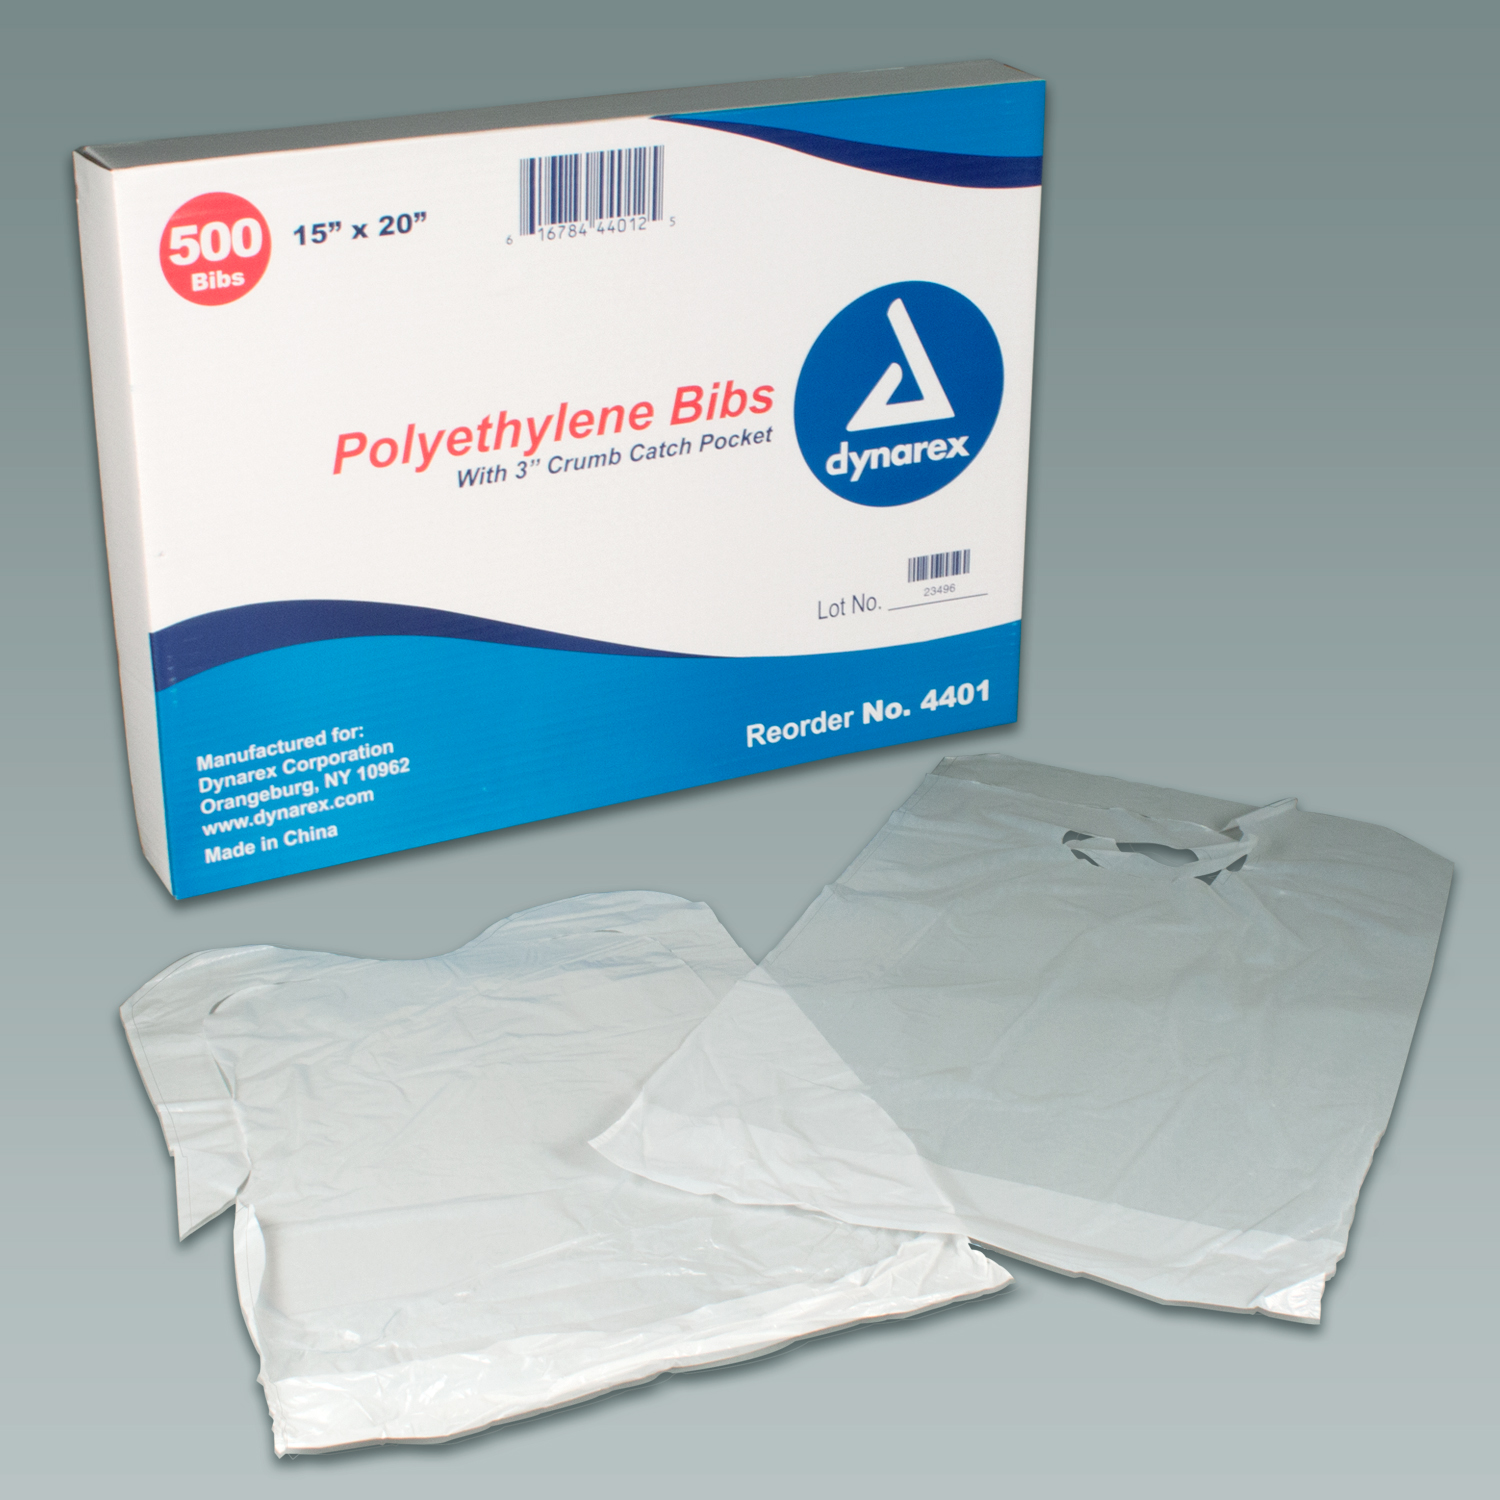 Polyethylene Bibs w/ 3in Crumb Catch Pocket - 15 x 20in